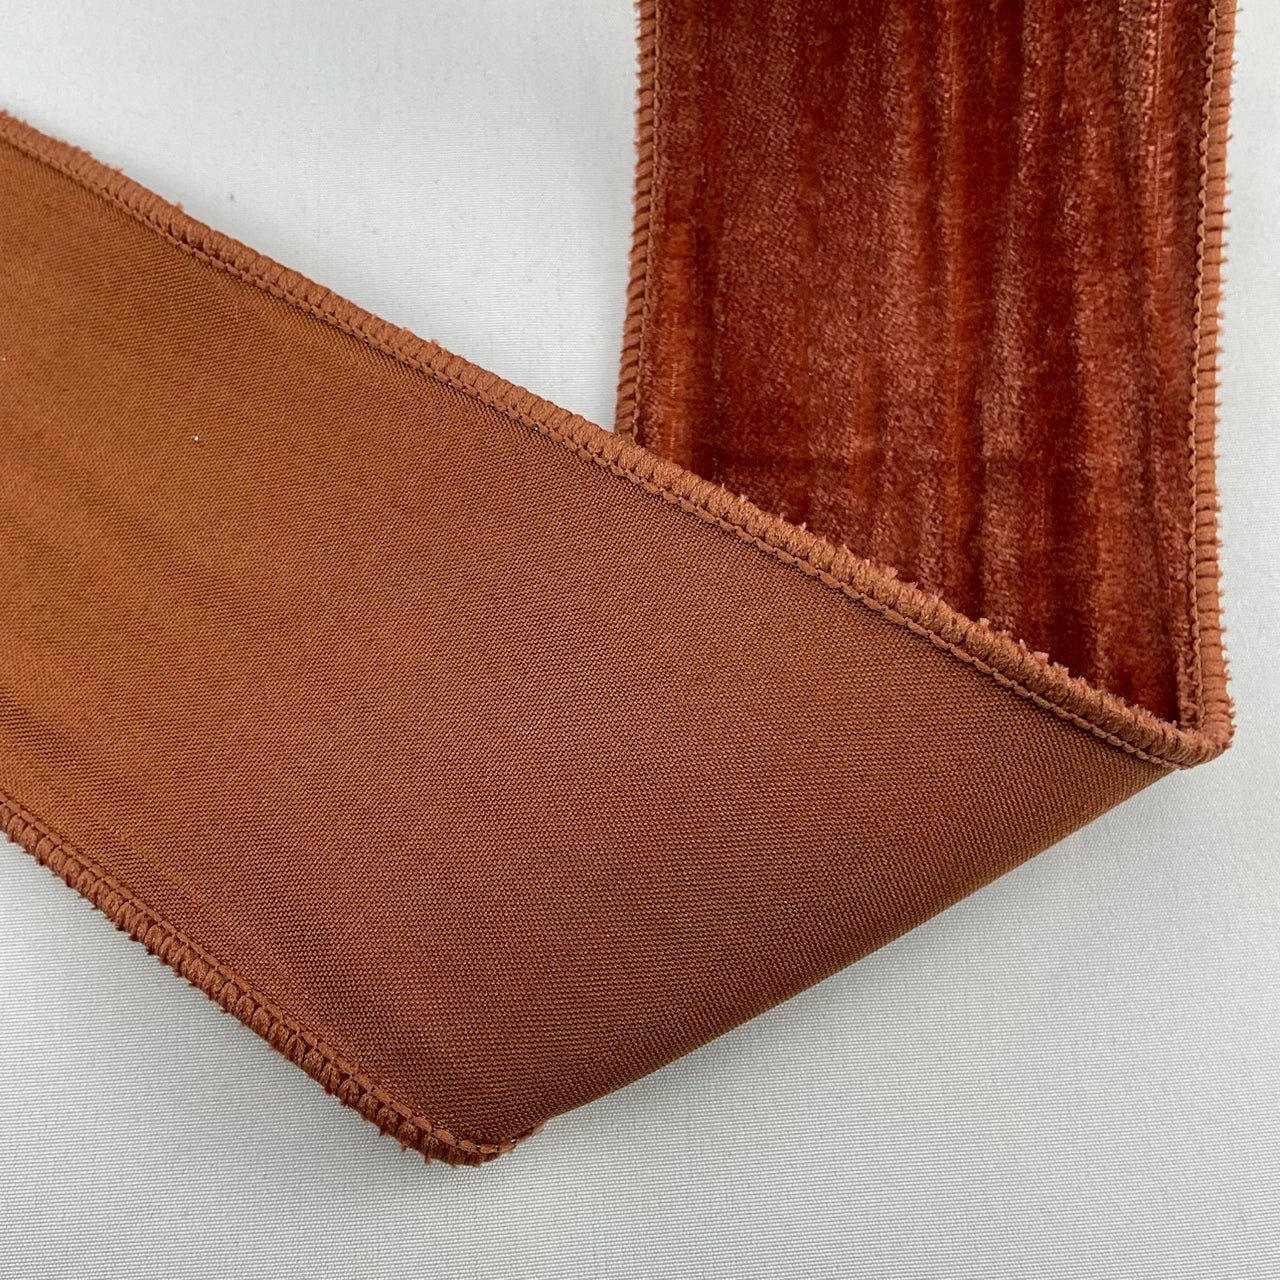 Rusty brown crinkled velvet 2.5” 20 yards - Greenery Market9745278